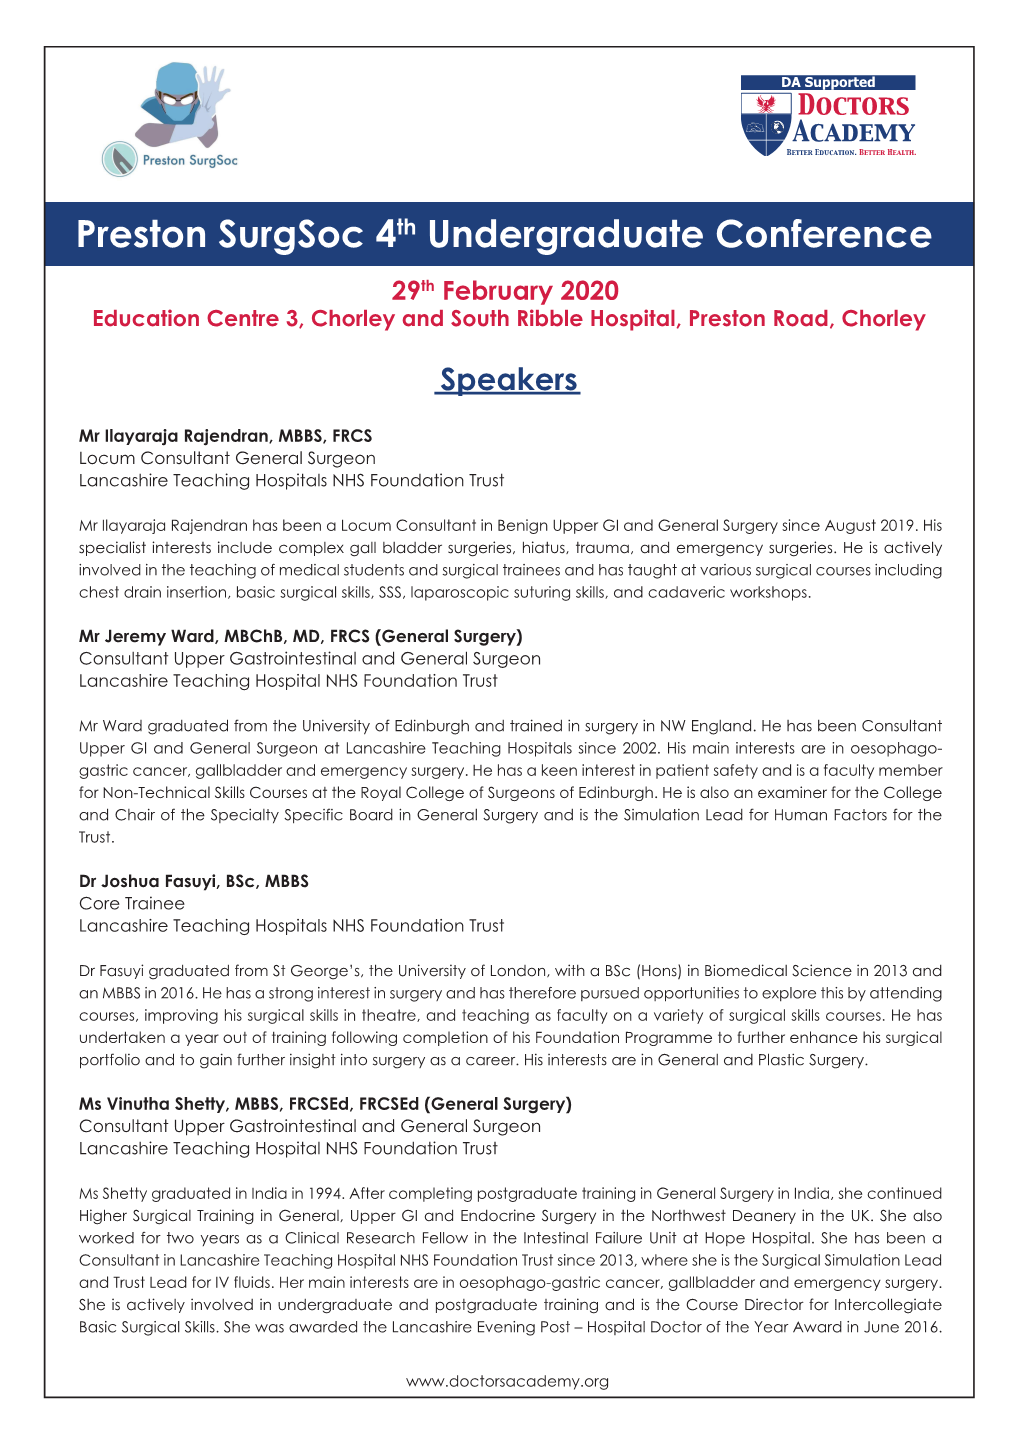 Preston Surgsoc 4Th Undergraduate Conference Speakers